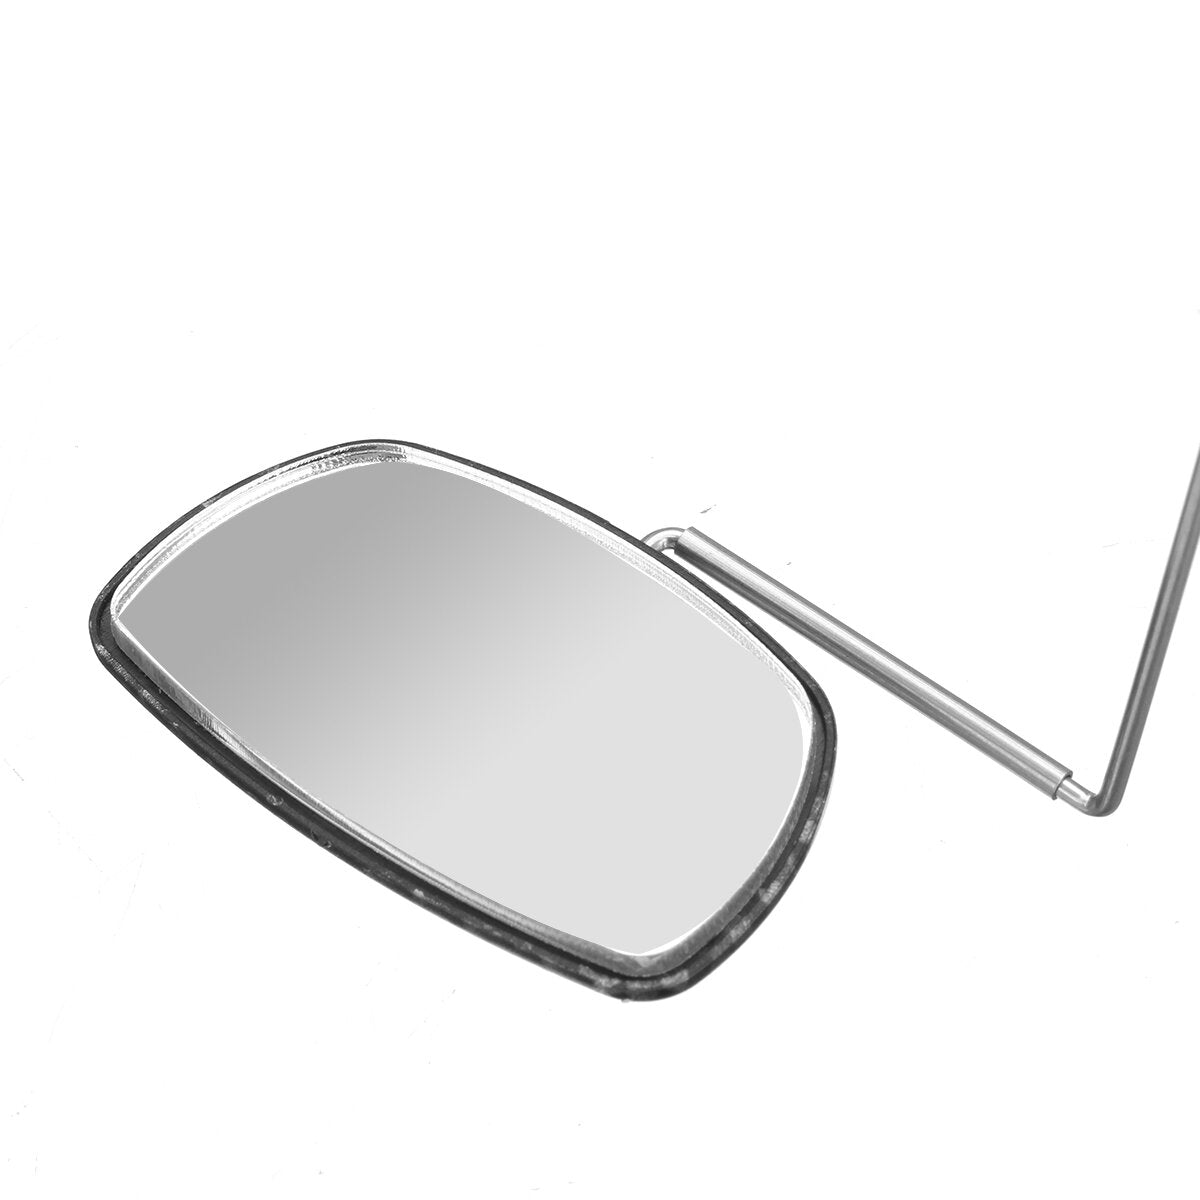 Aluminum Alloy 360 Degree Bike Helmet Mount Rear View Mirrors Adjustable